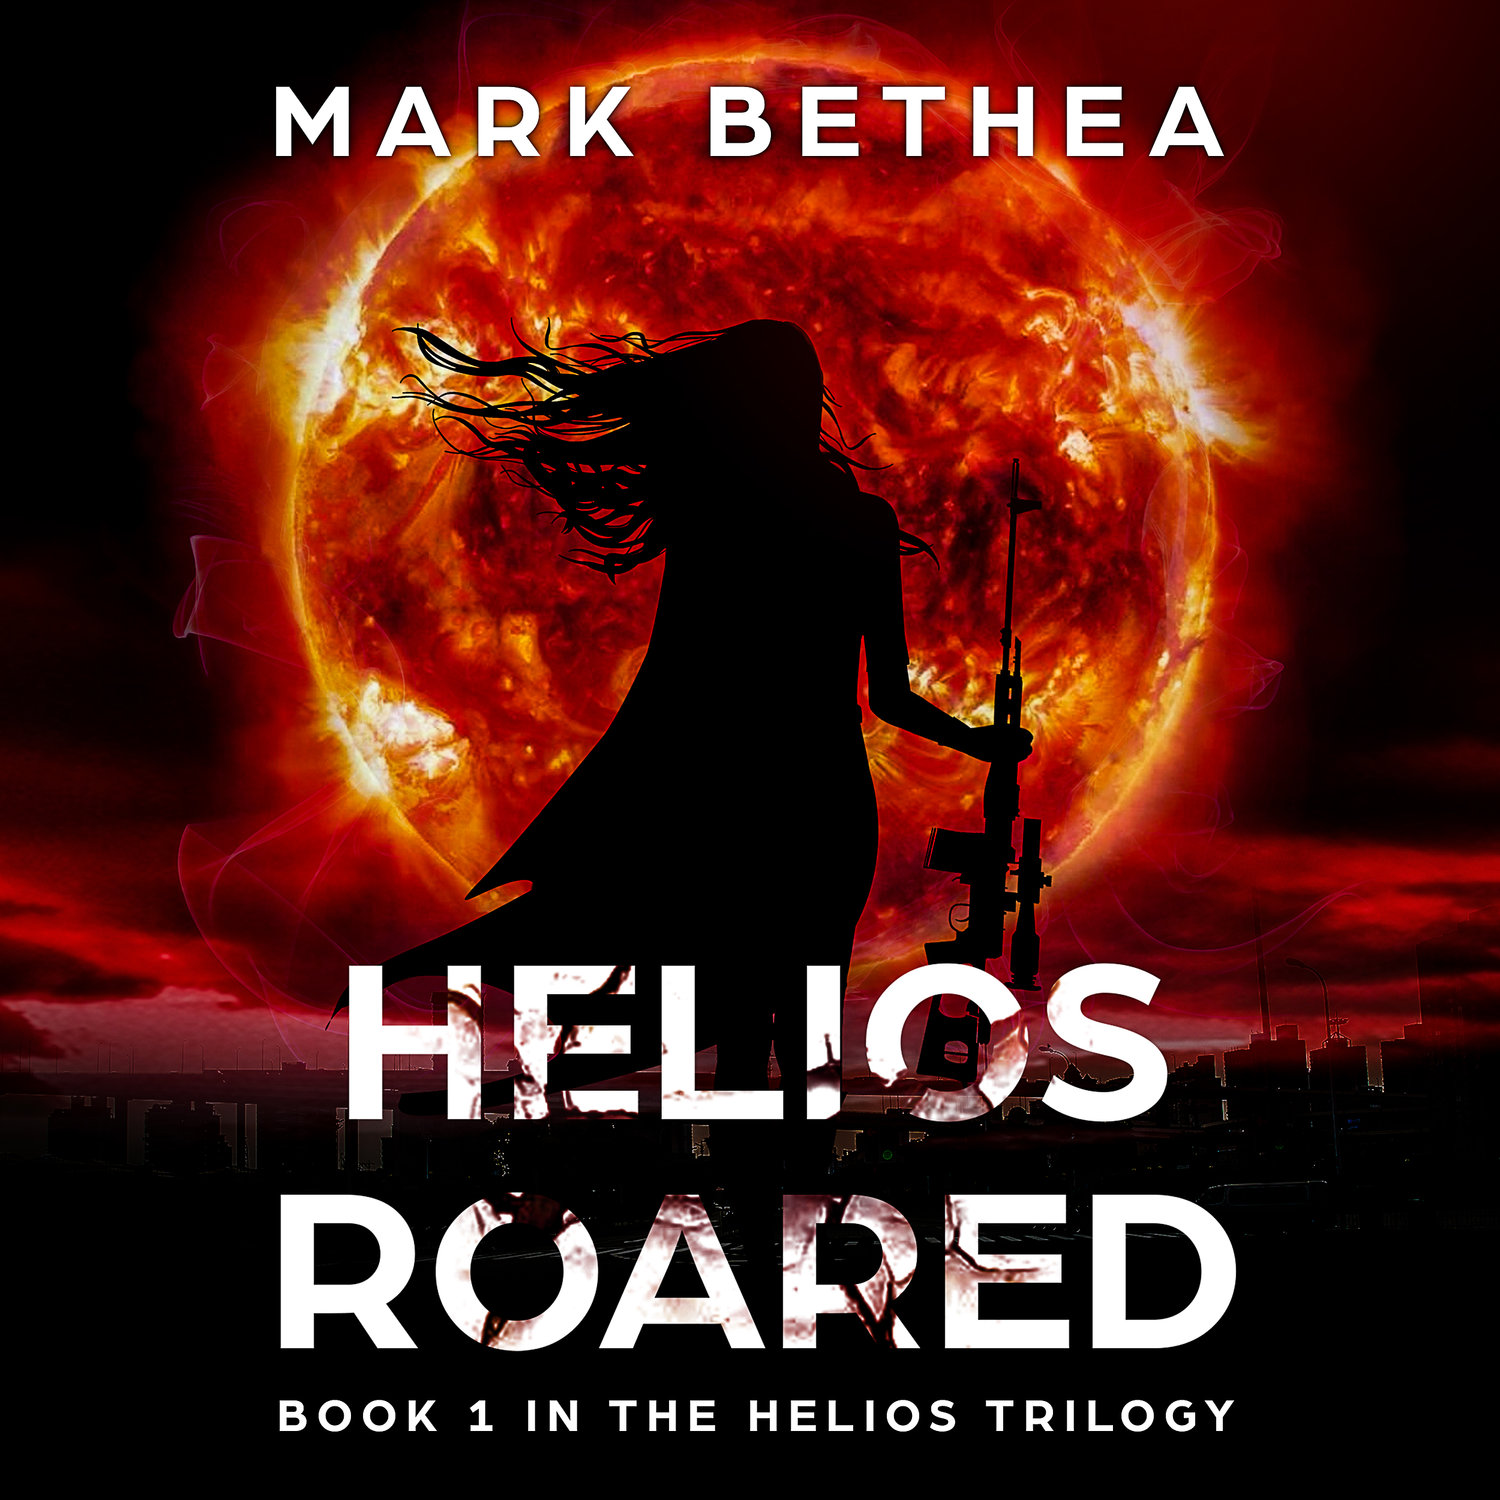 Helios Roared - A Novel